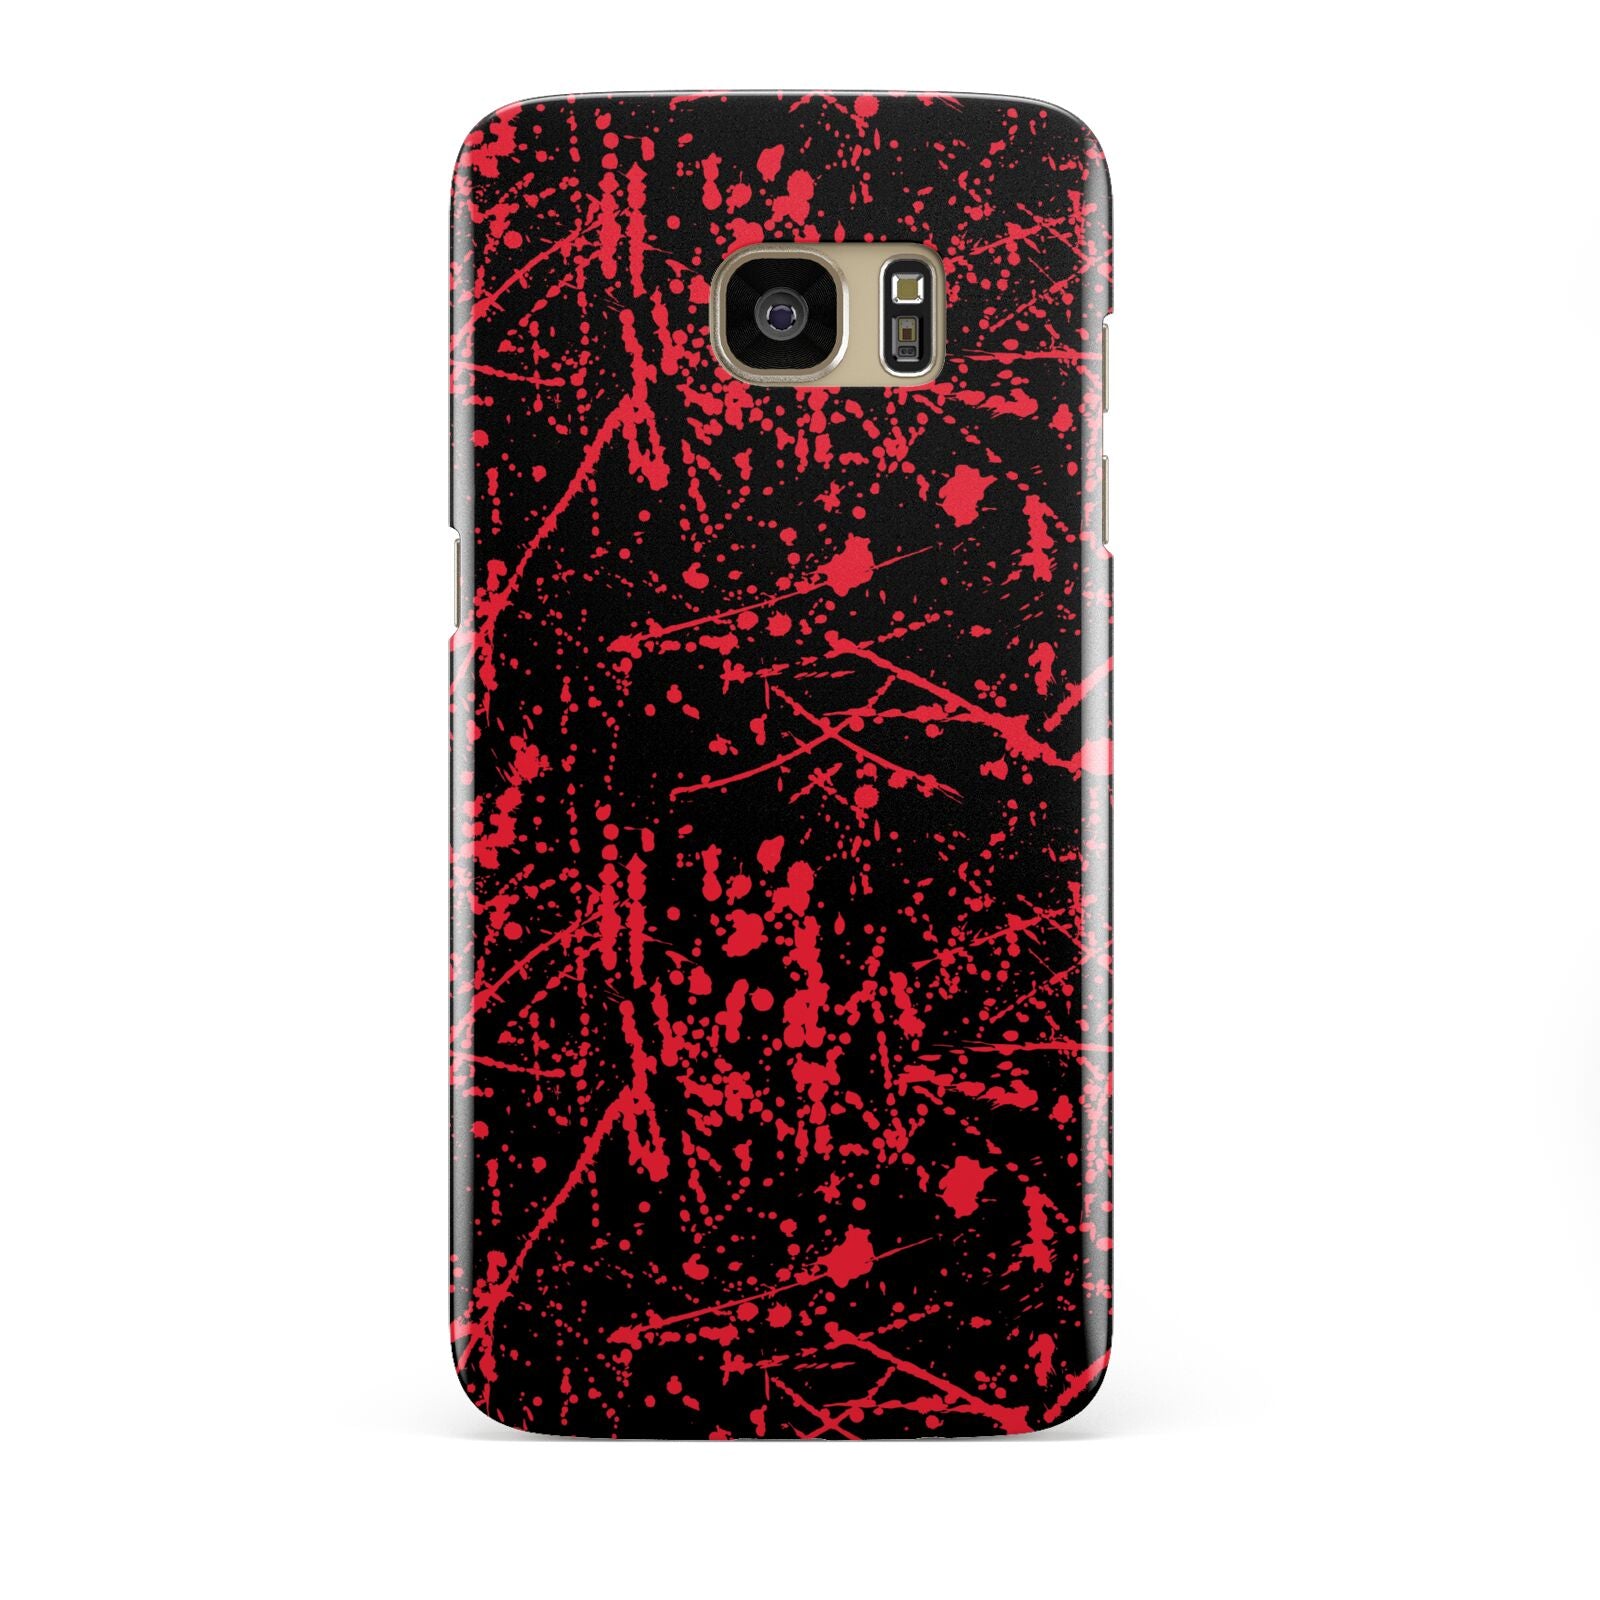 Blood Splatters Samsung Galaxy S7 Edge Case